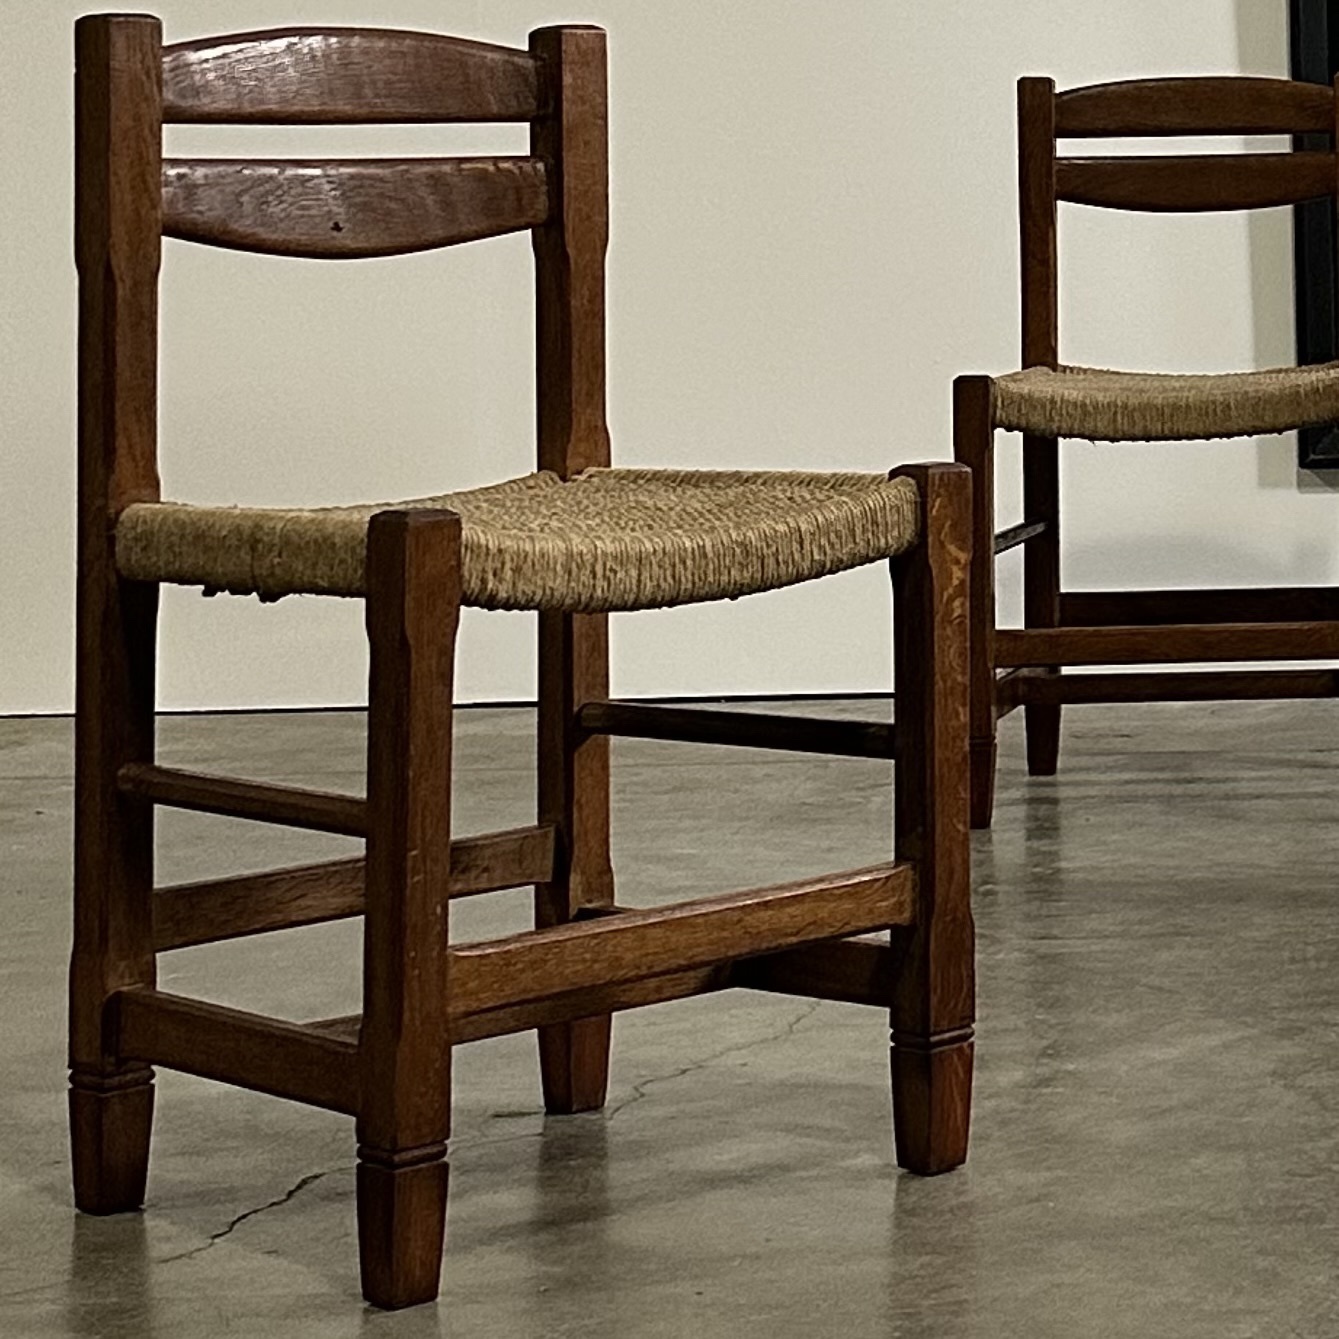 objet-vagabond-rope-chairs0006